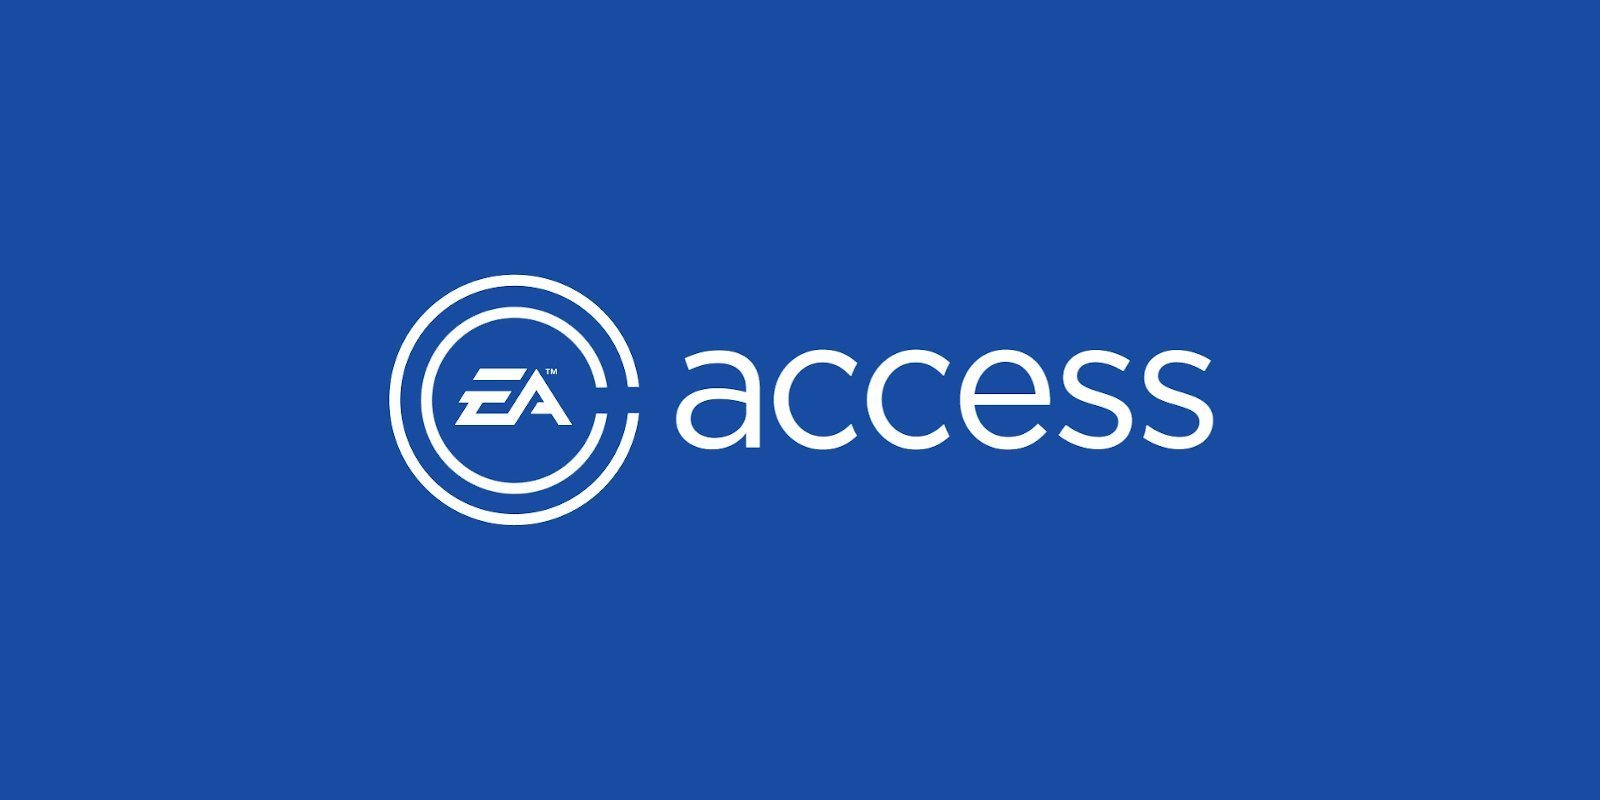 EA Access llegará pronto a Steam